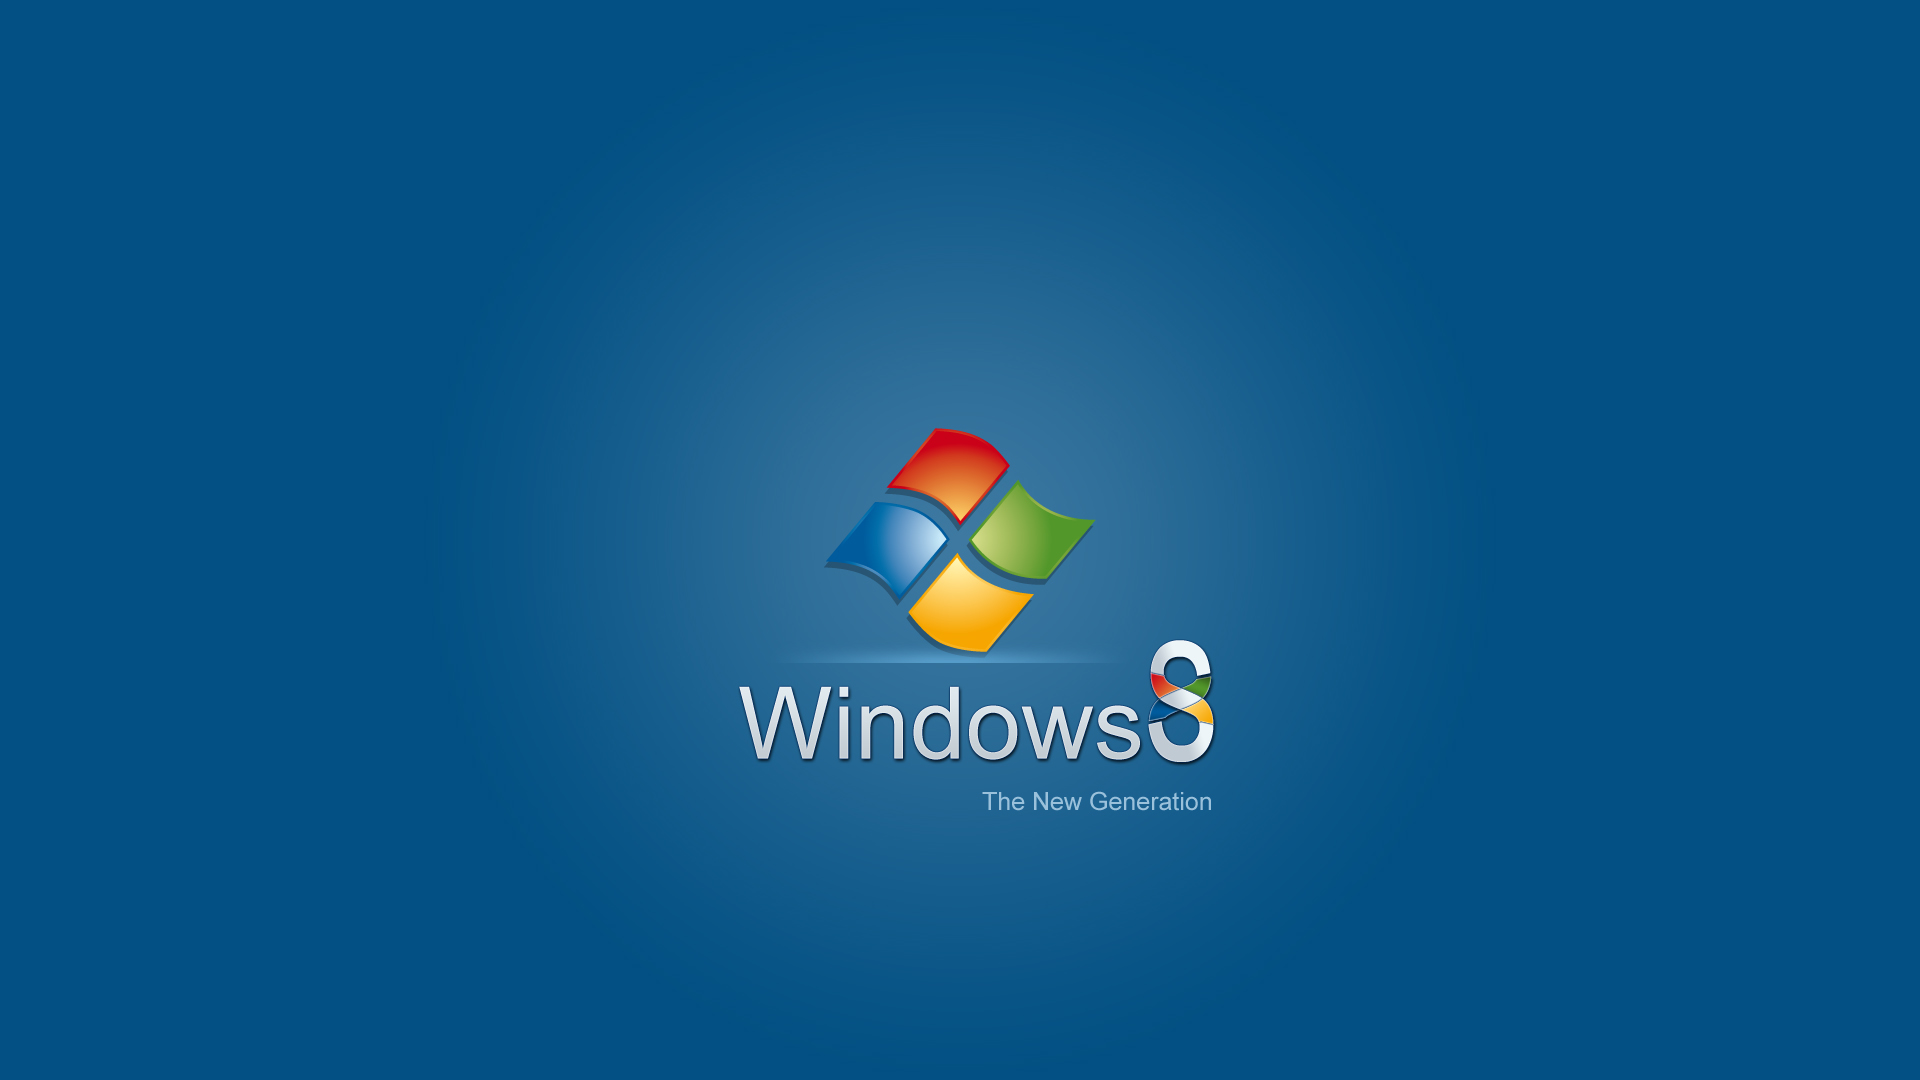 Windows Wallpaper Hd Download Windows Wallpapers Hd